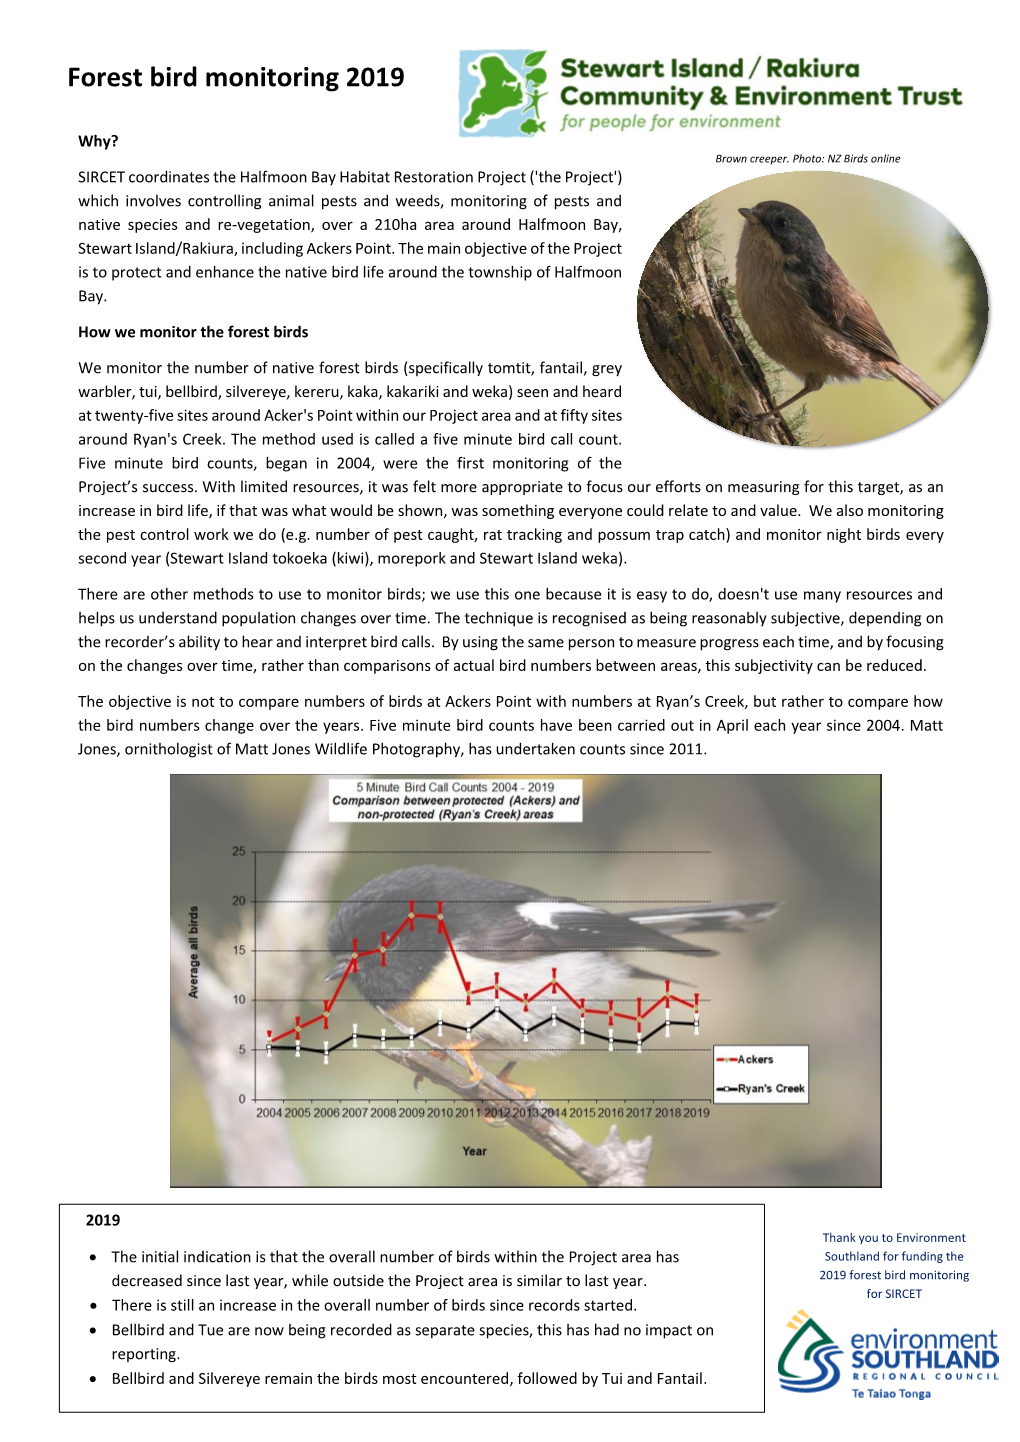 Forest Bird Monitoring 2019